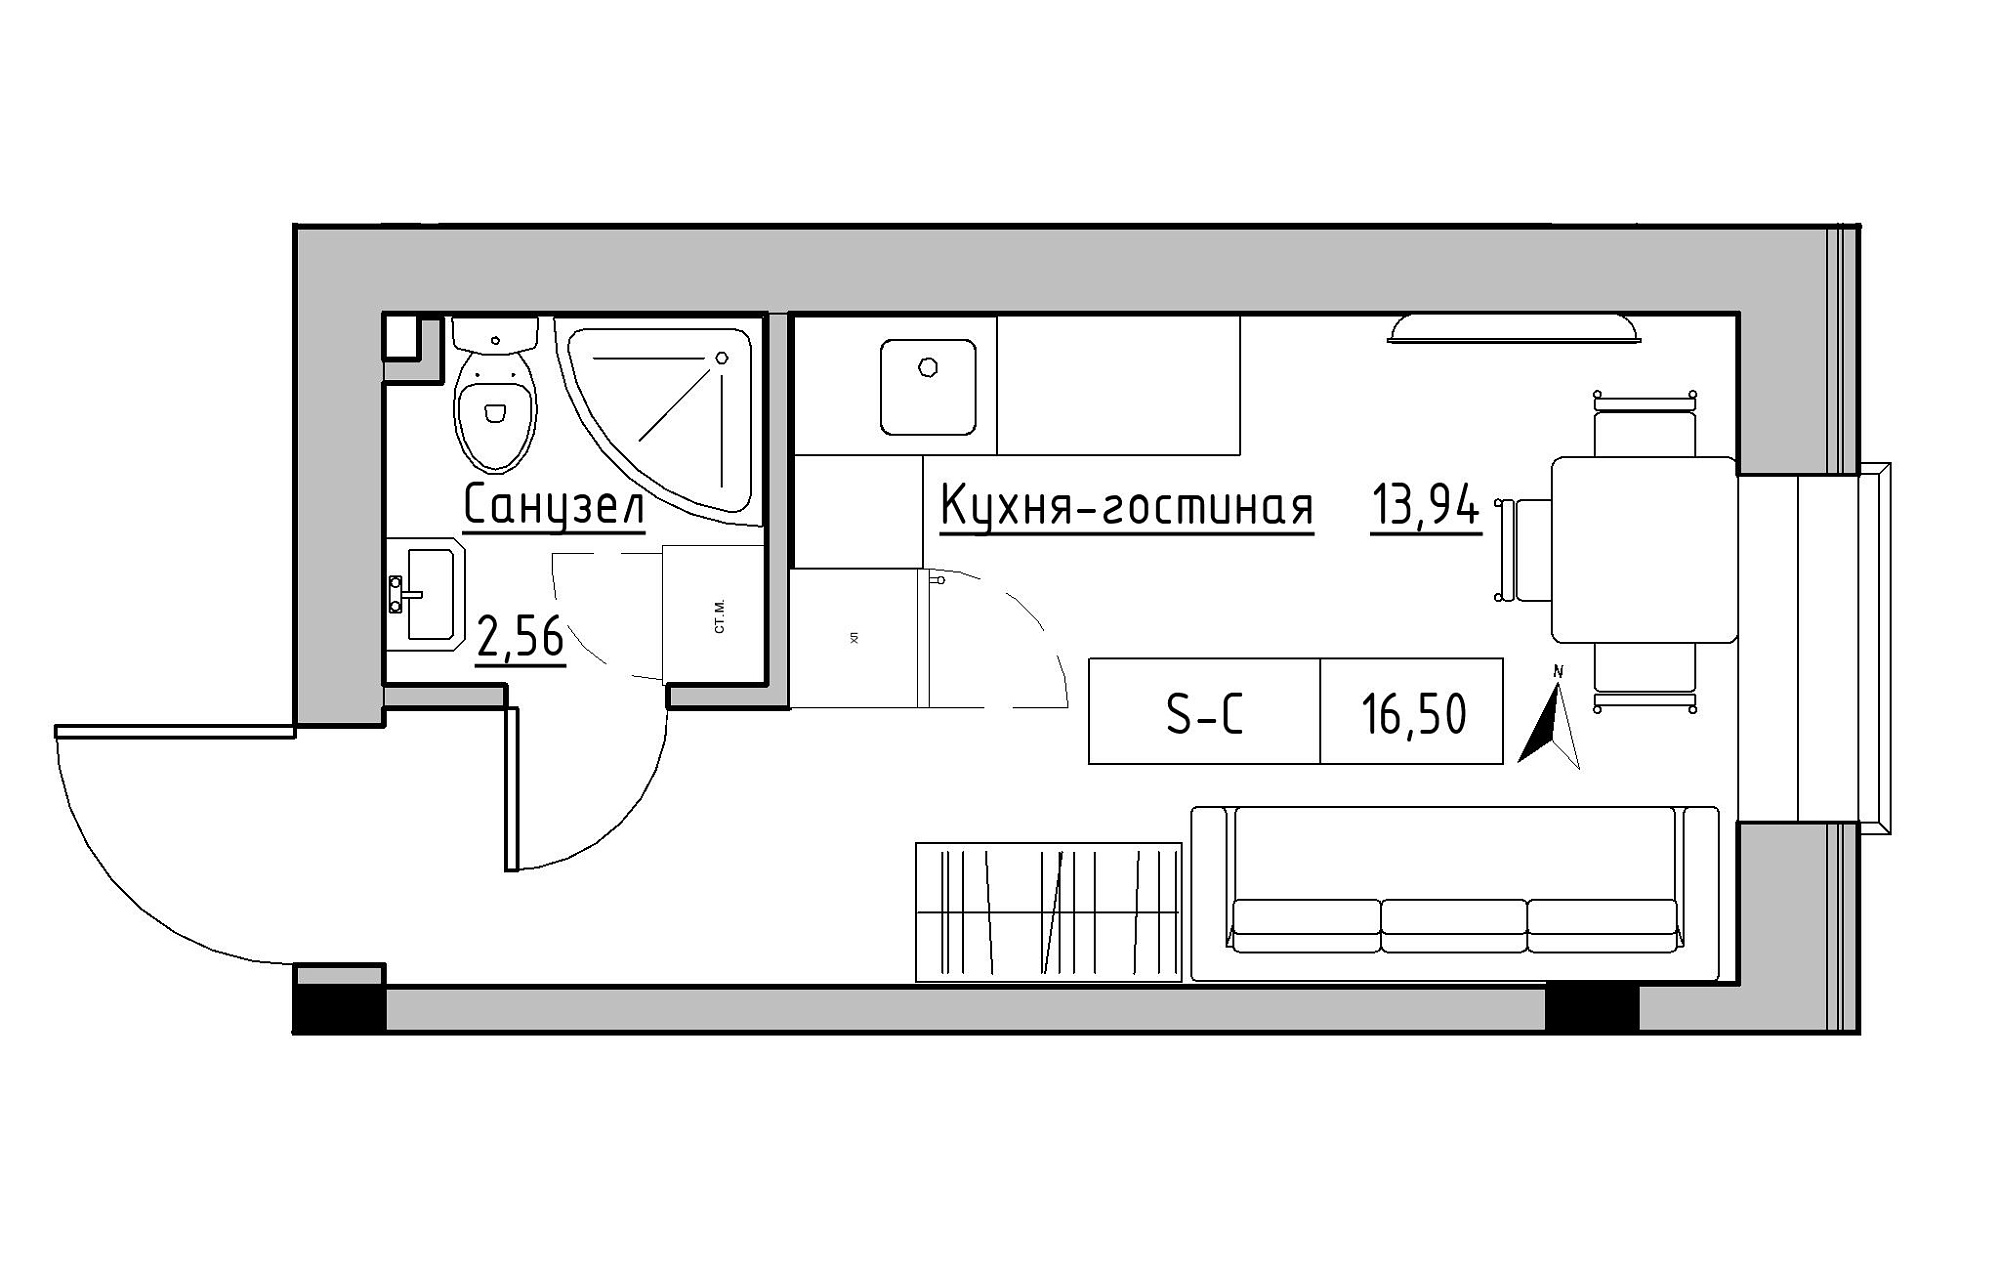 Planning Smart flats area 16.5m2, KS-019-02/0005.